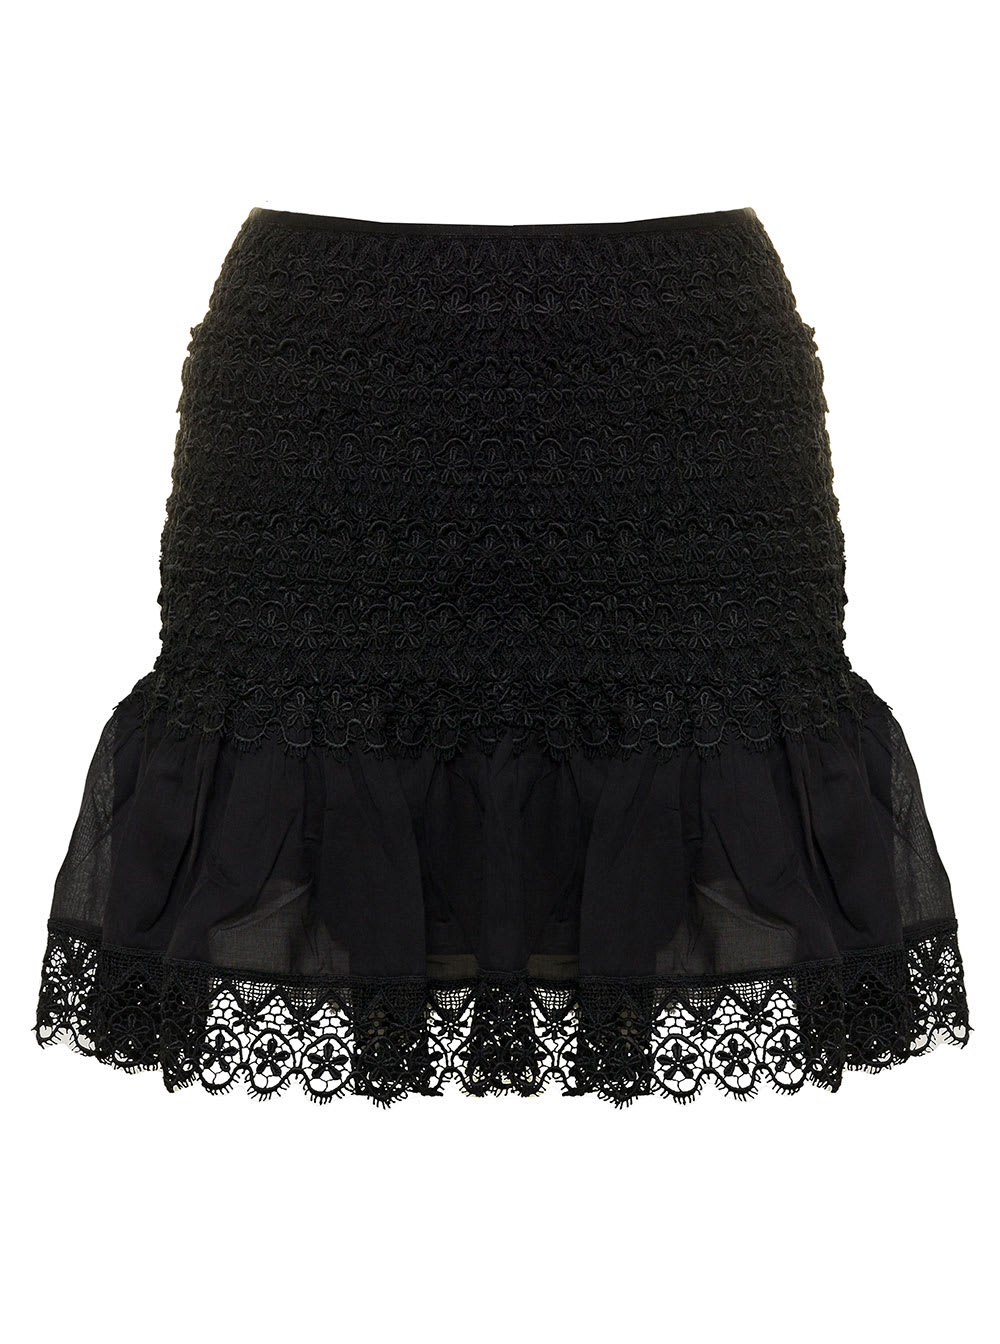 Charo Ruiz Womans Black Cotton Fleus Skirt With Embroidery